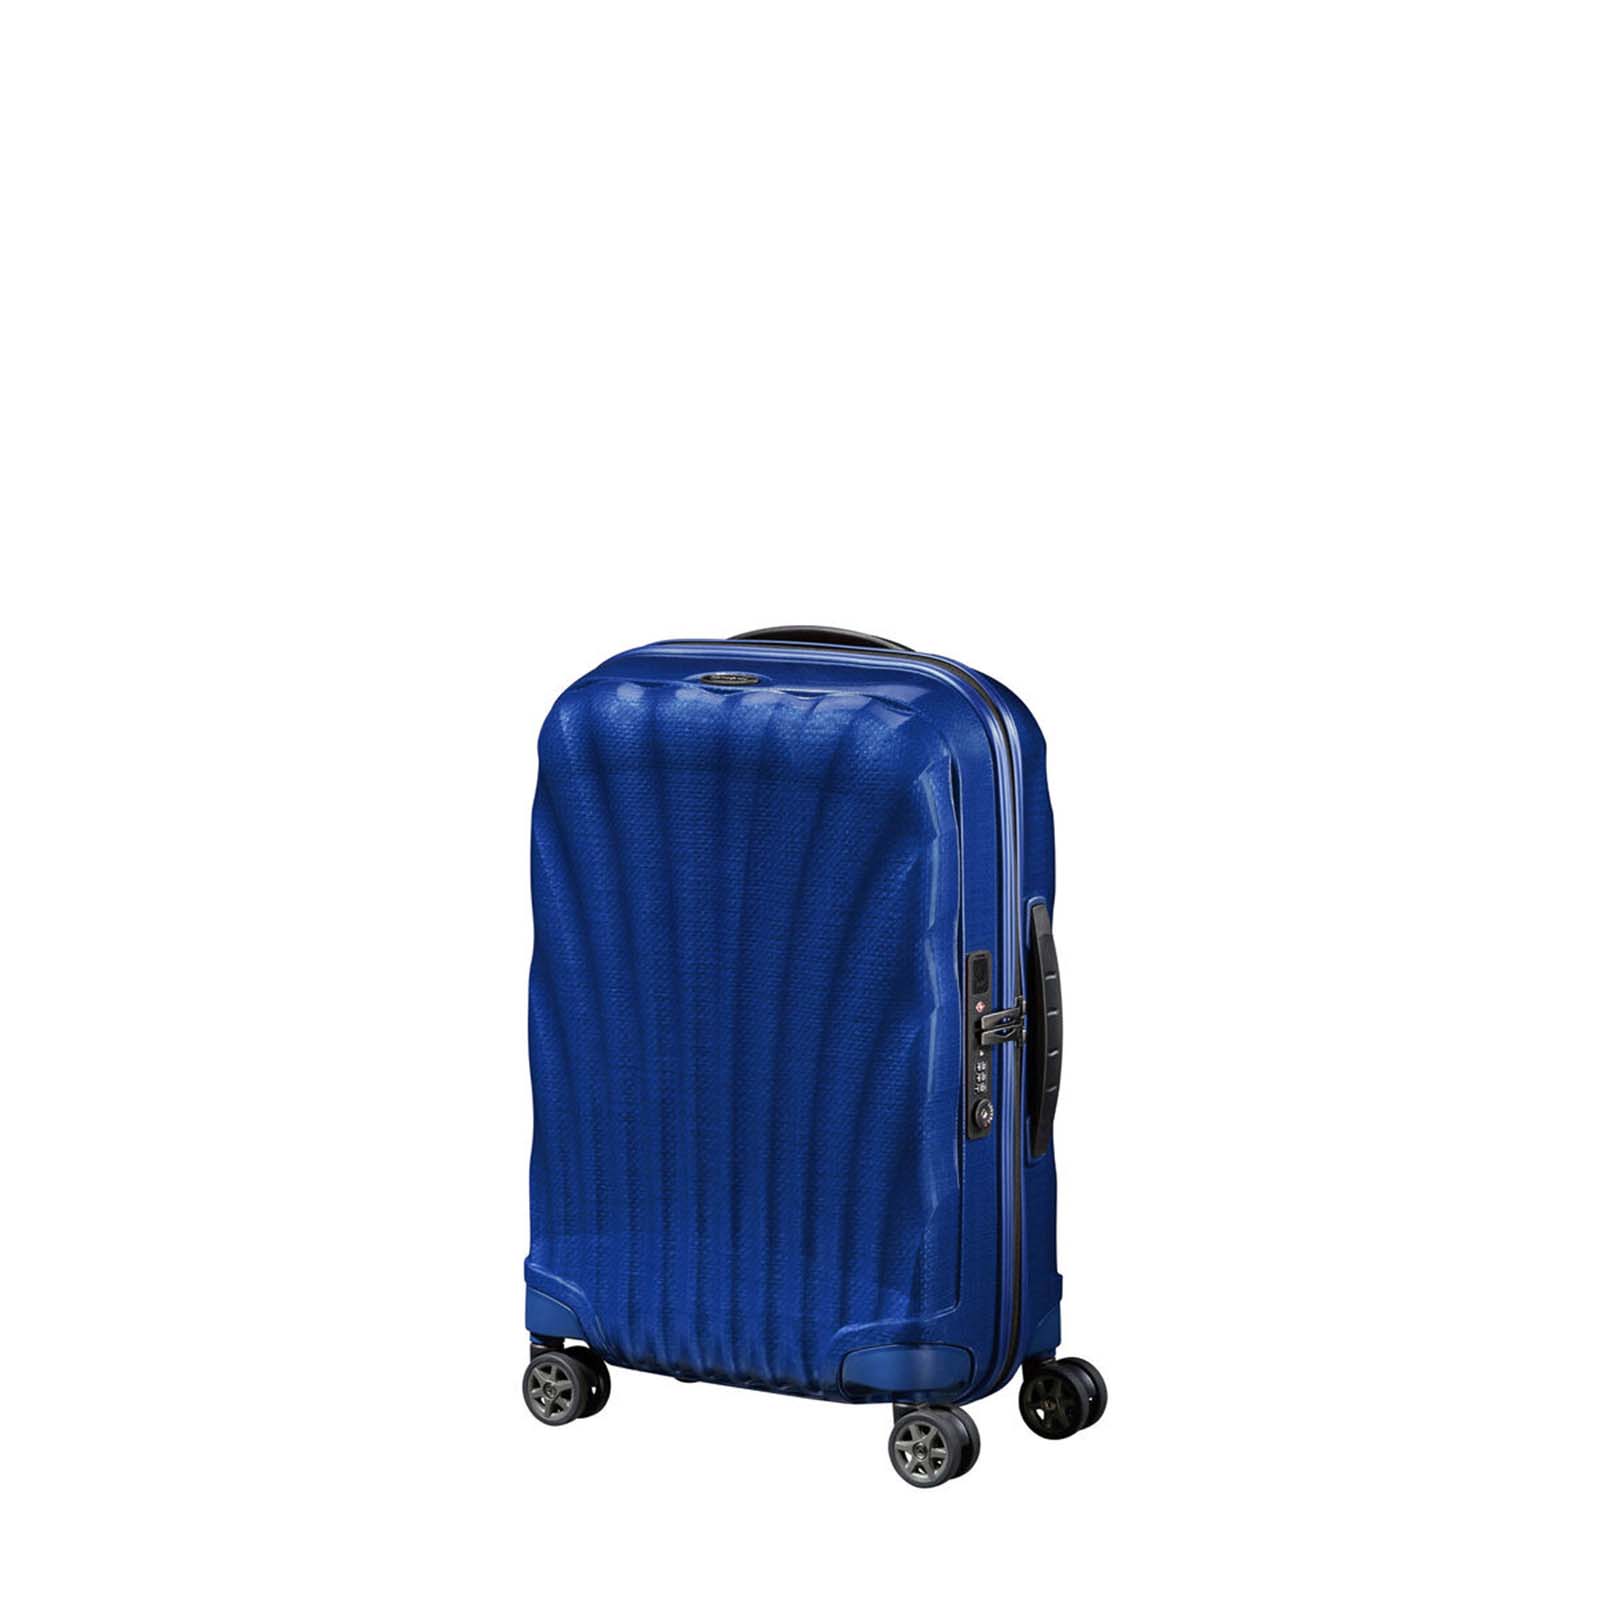 Samsonite-C-Lite-55cm-Suitcase-Deep-Blue-Front-Angle